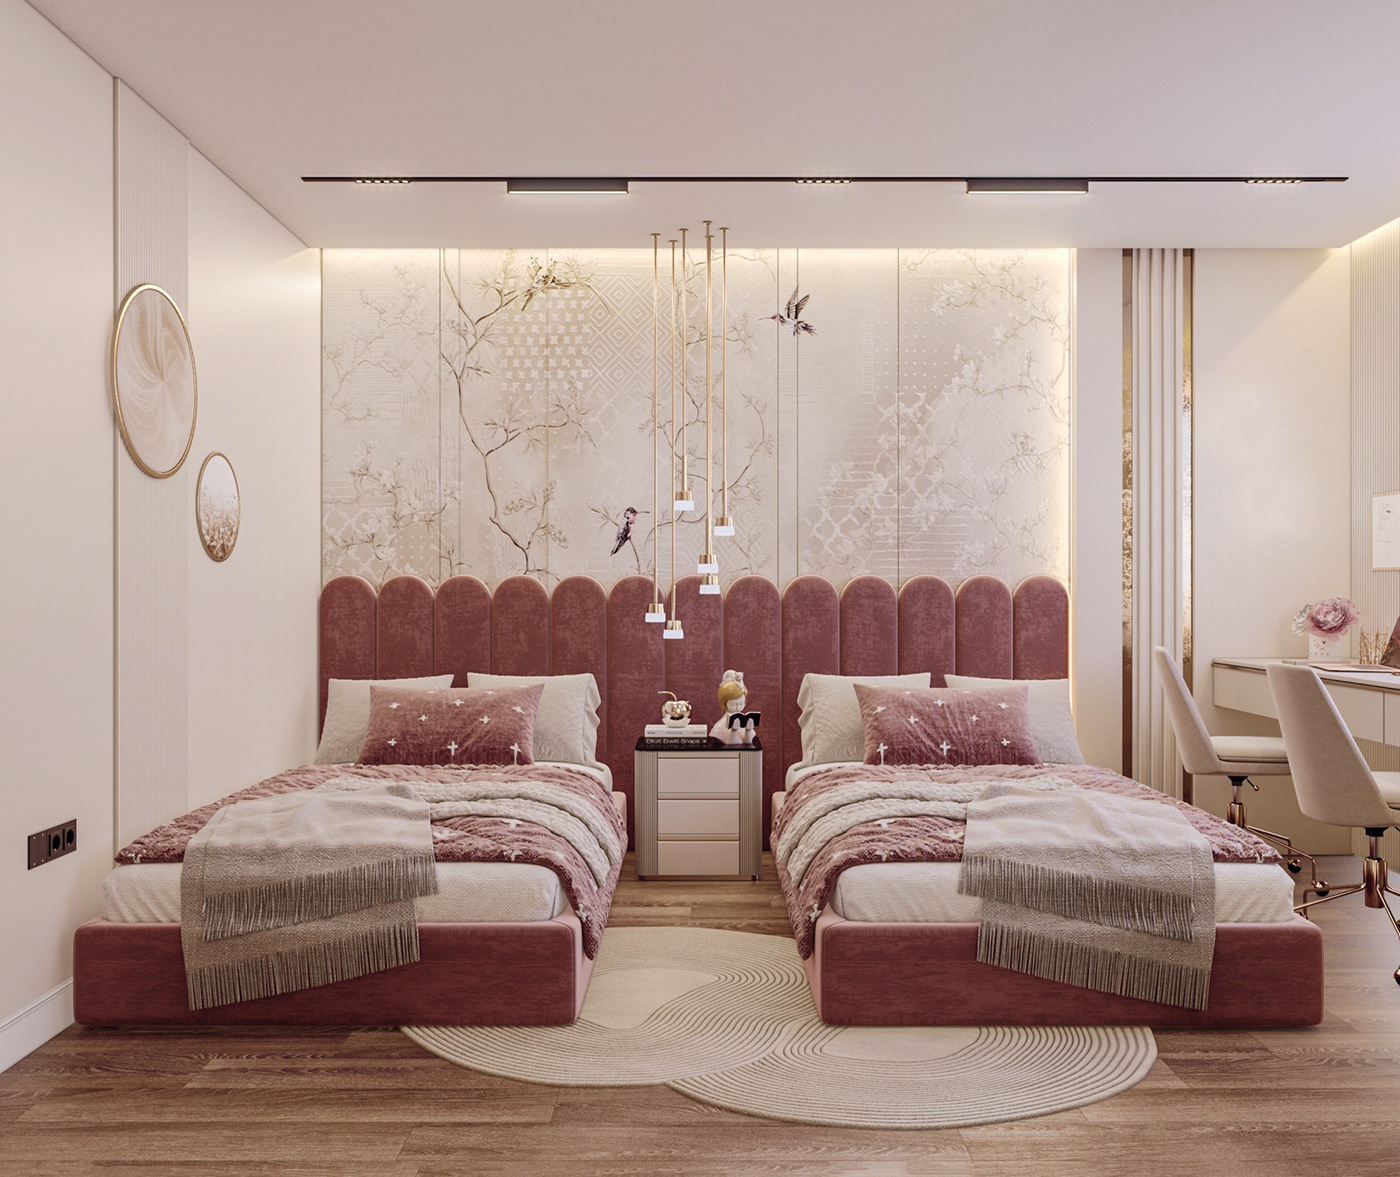 3ds max architecture interior design  vray CGI archviz Circu Magical Furniture Delightfull Essential Home